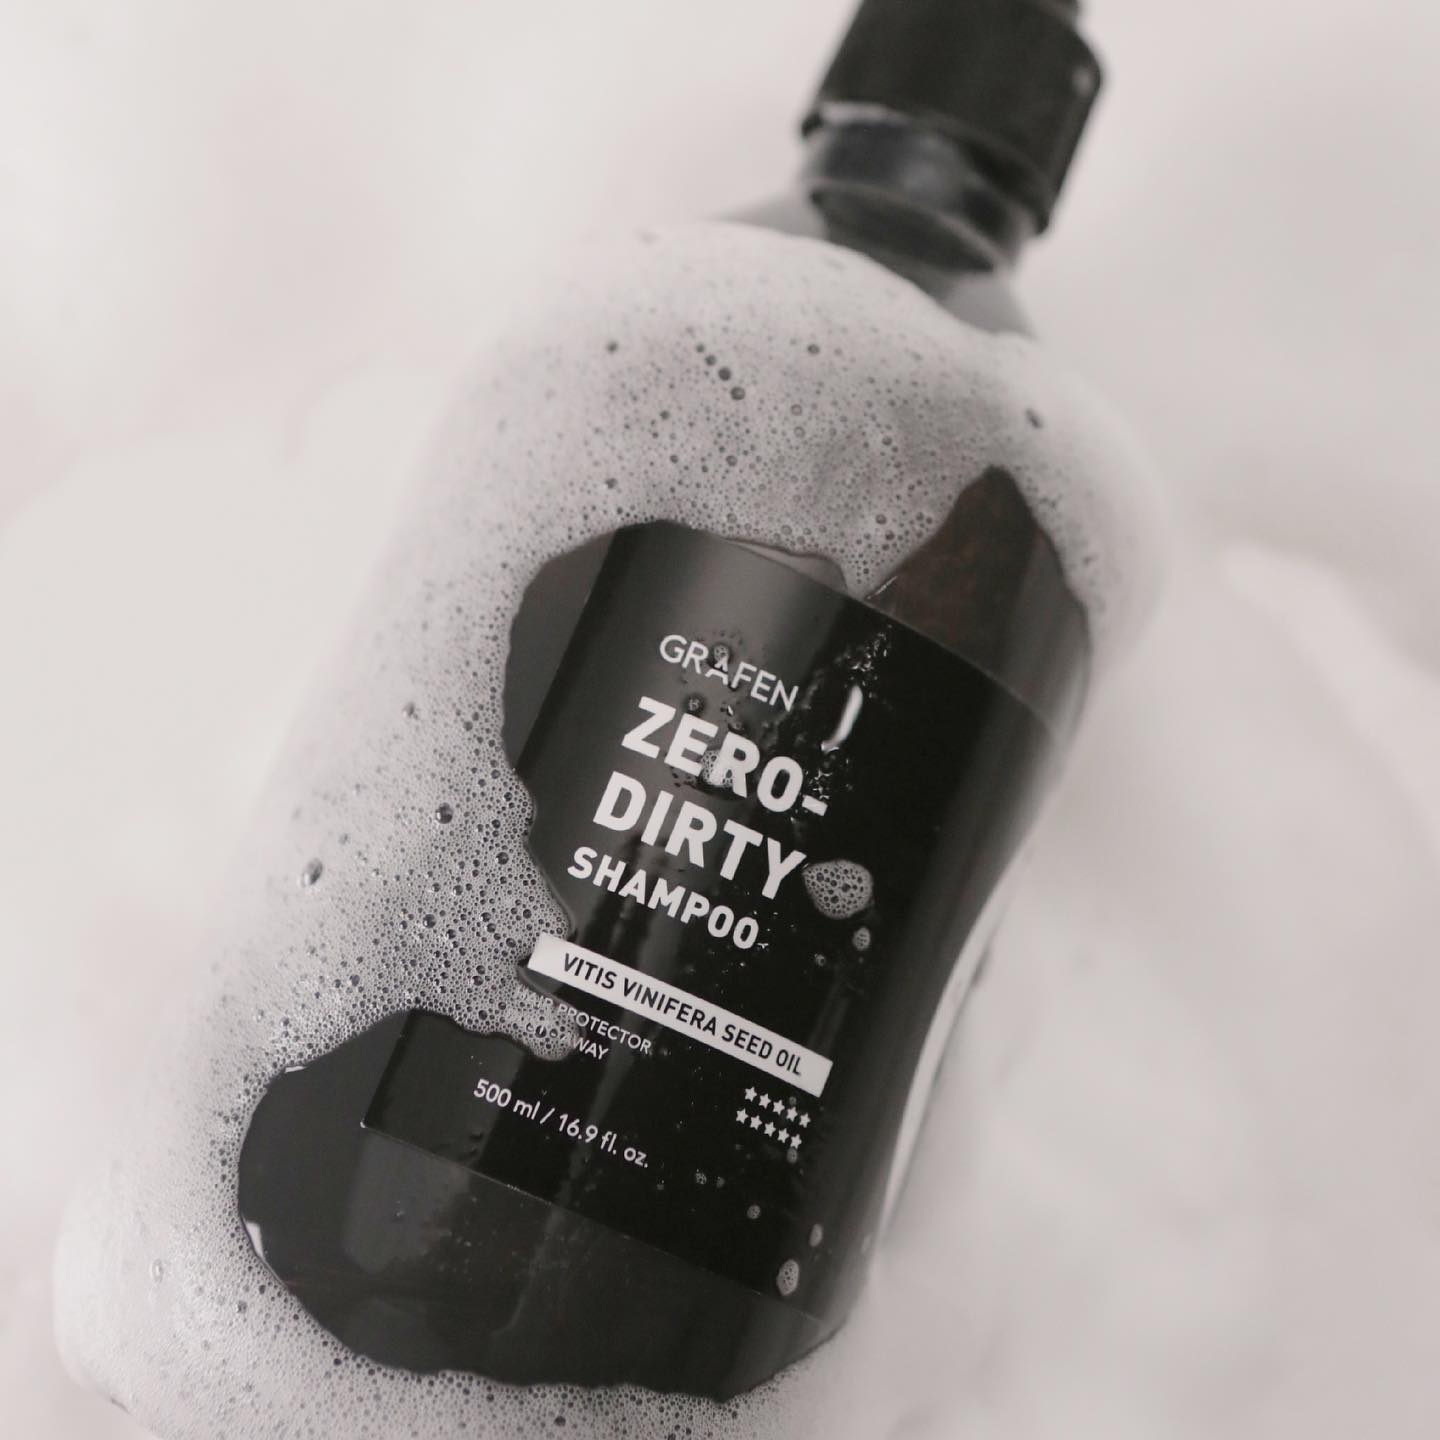 Grafen Zero-Dirty Shampoo 500ml แชมพูที่มีส่วนประกอบของ HP-DCC เอกสิทธิของกราเฟน ช่วยปกป้องหนังศีรษะและเส้นผมจากมลภาวะ และสารเคมีต่างๆ ให้ผมกลับมานุ่ม เงา สวยอีกครั้ง